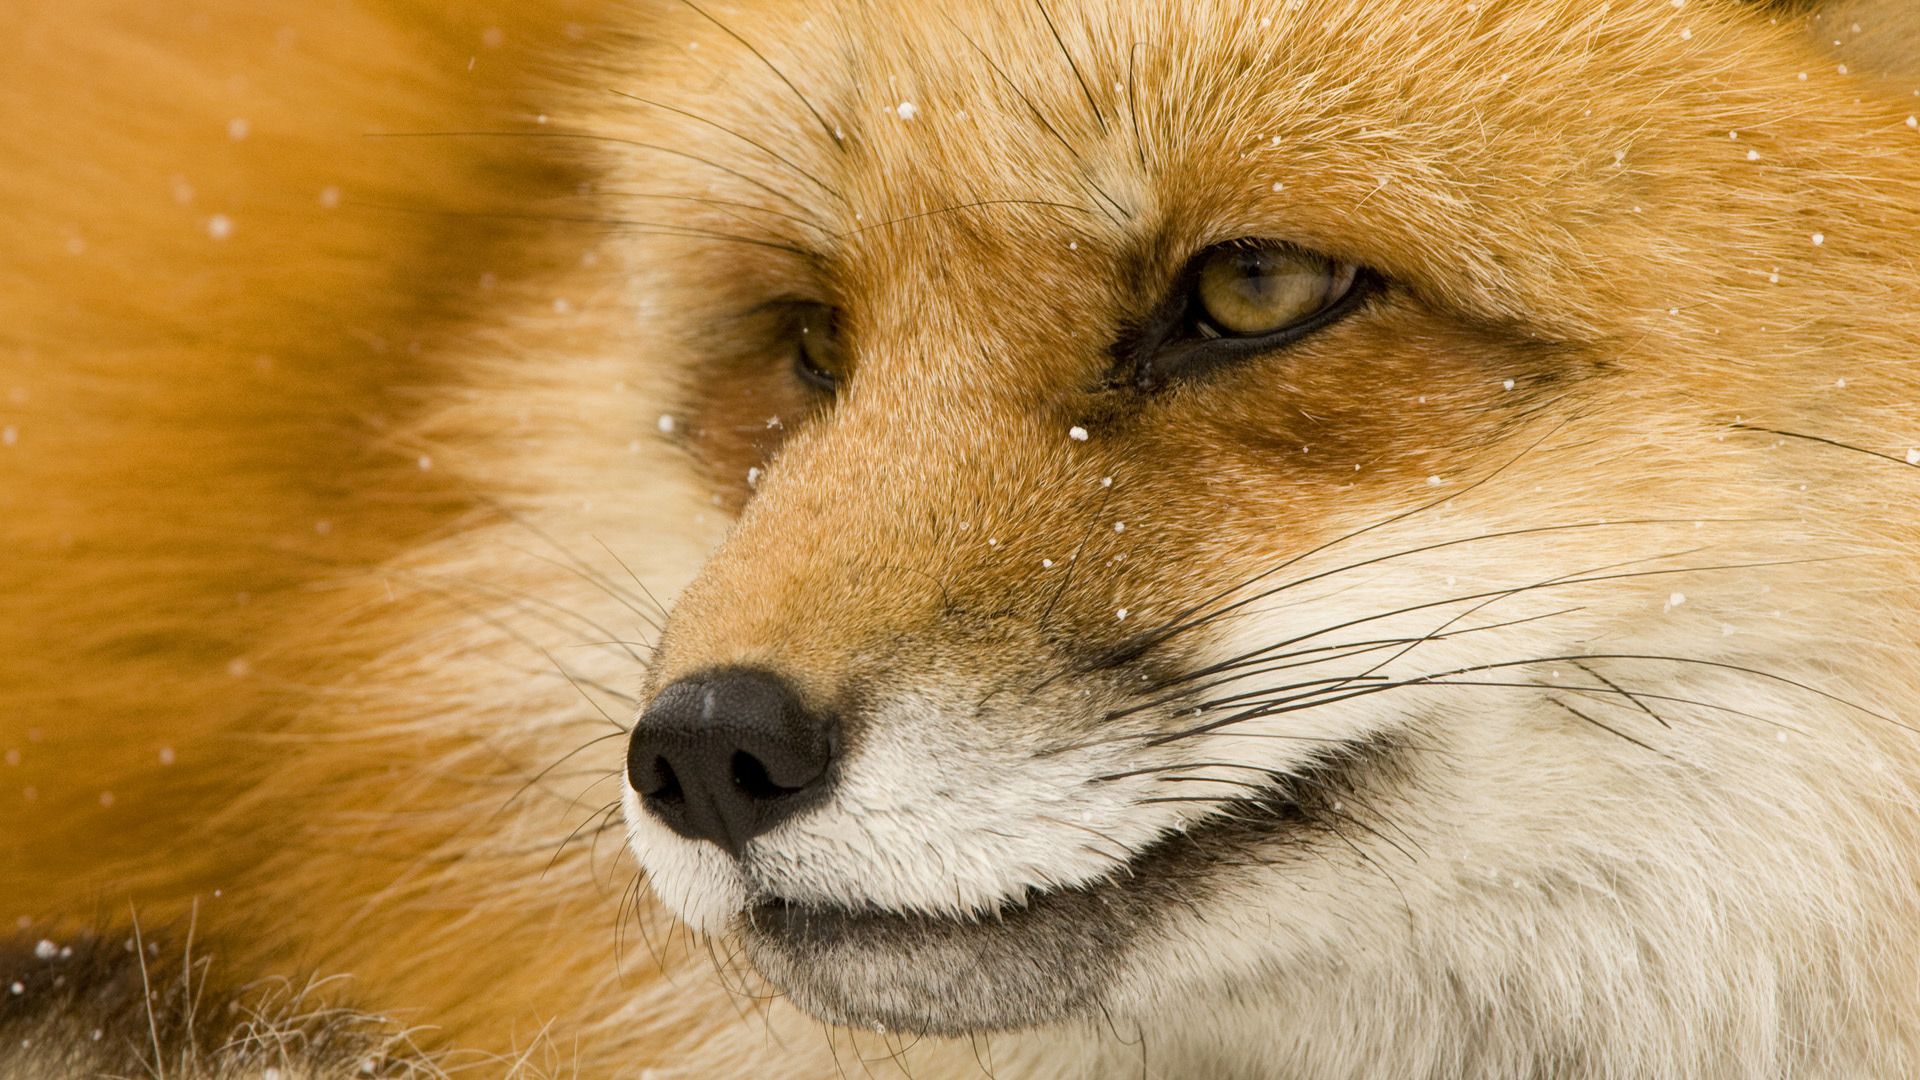 The Fox Photos